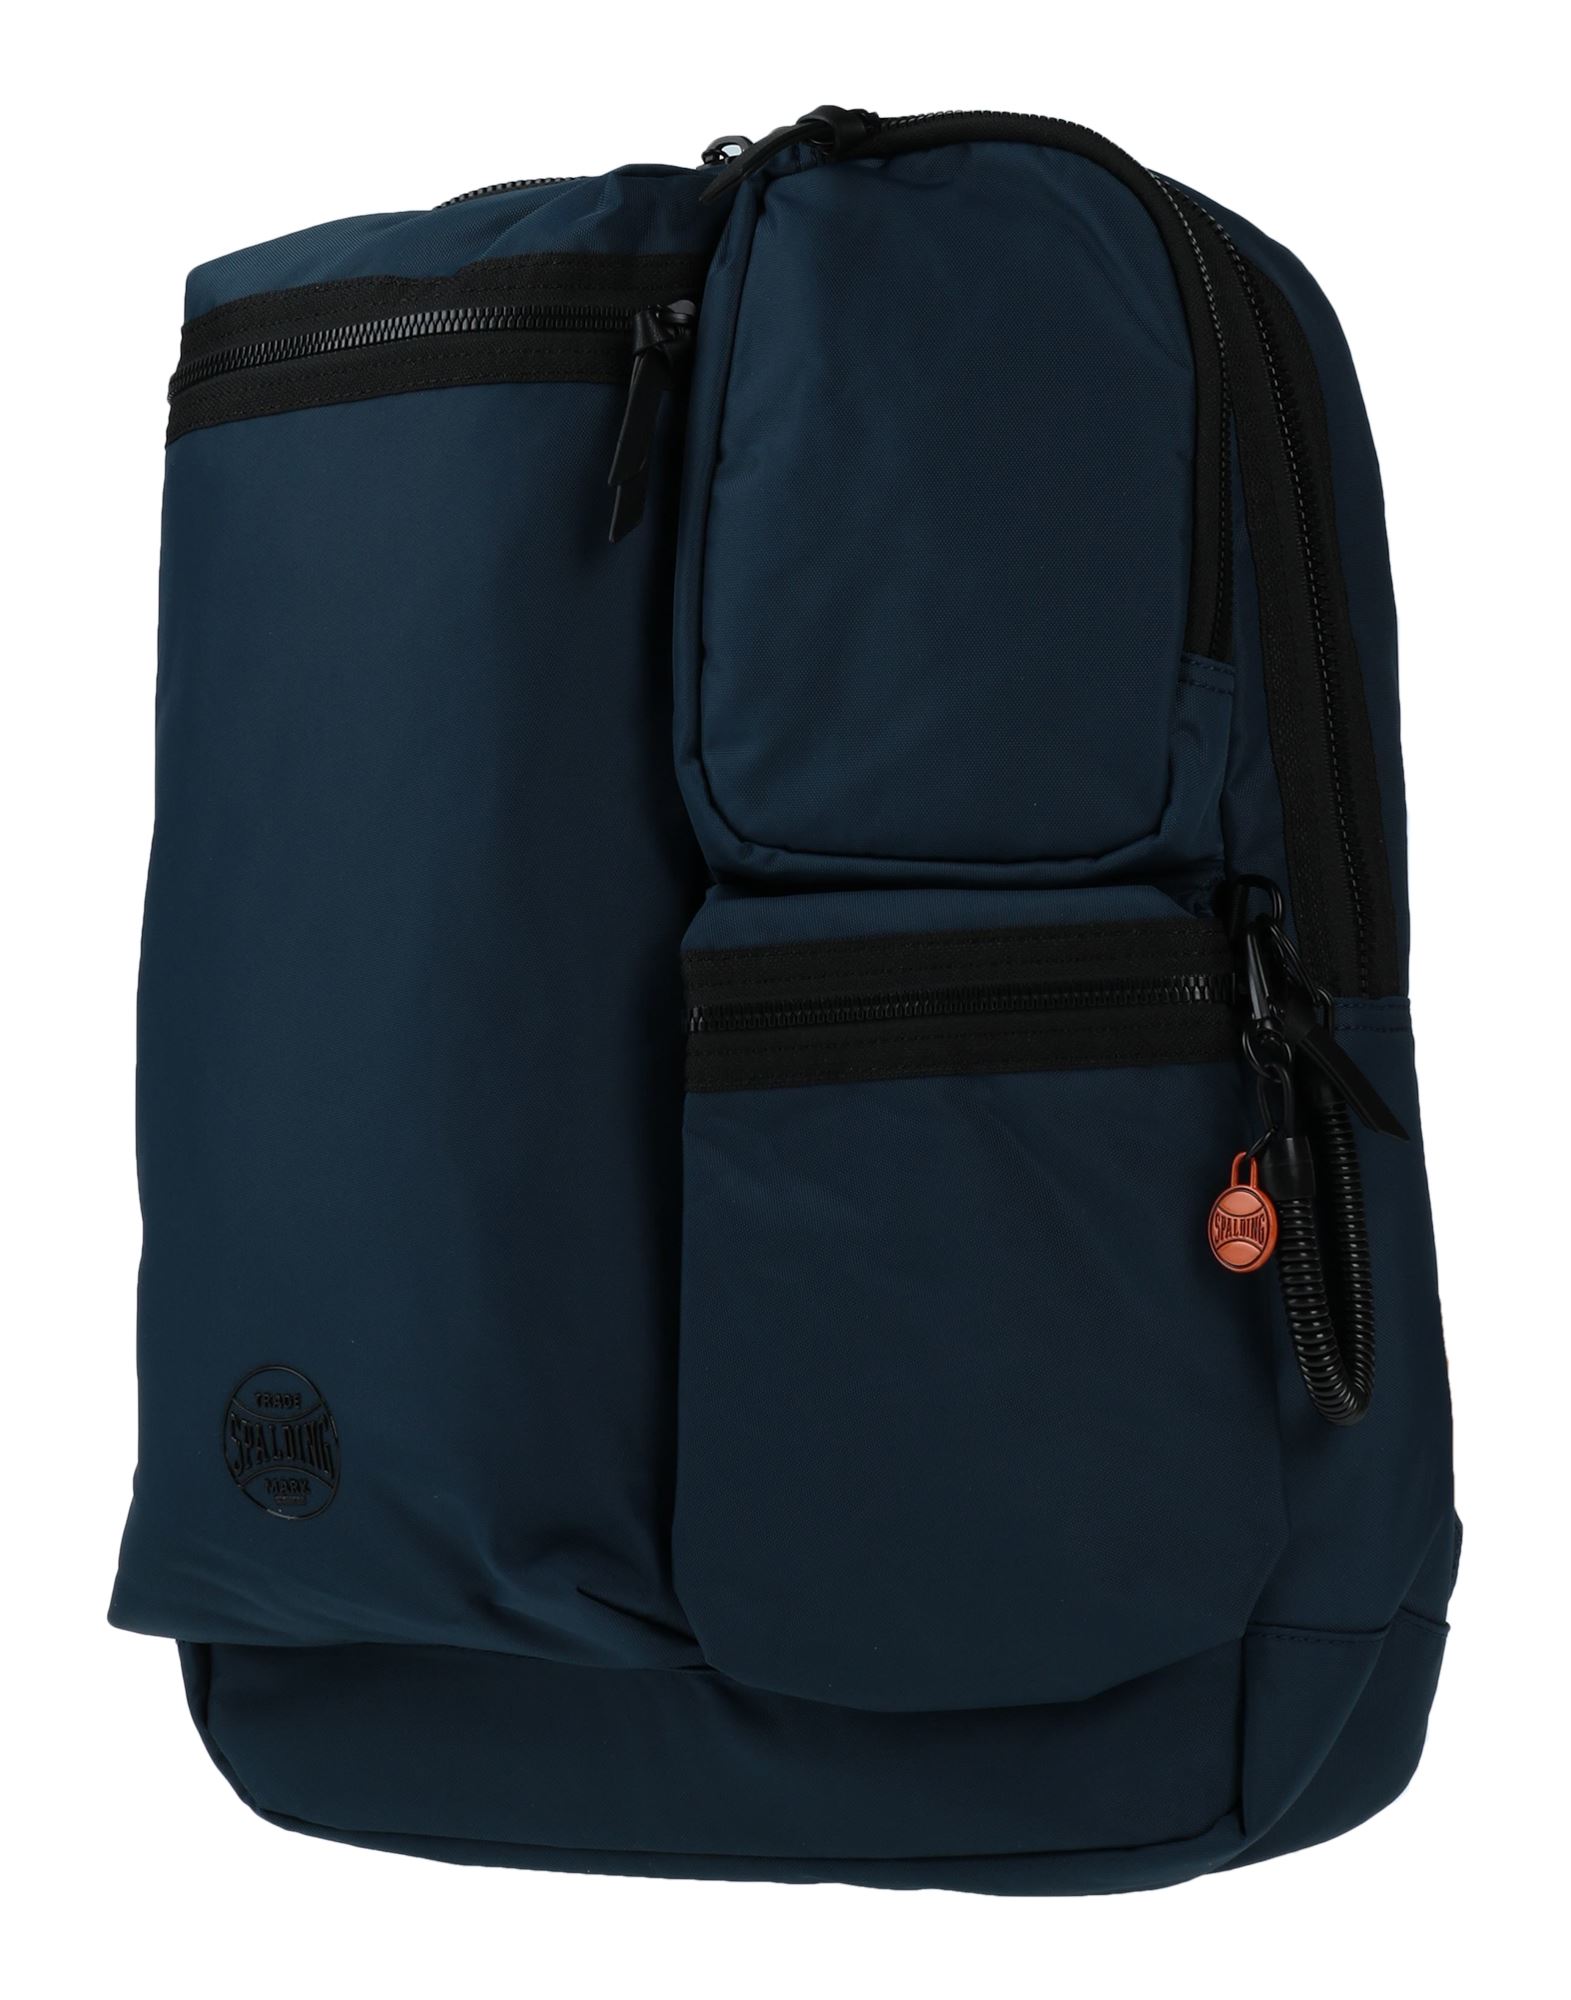 Spalding Backpacks In Slate Blue